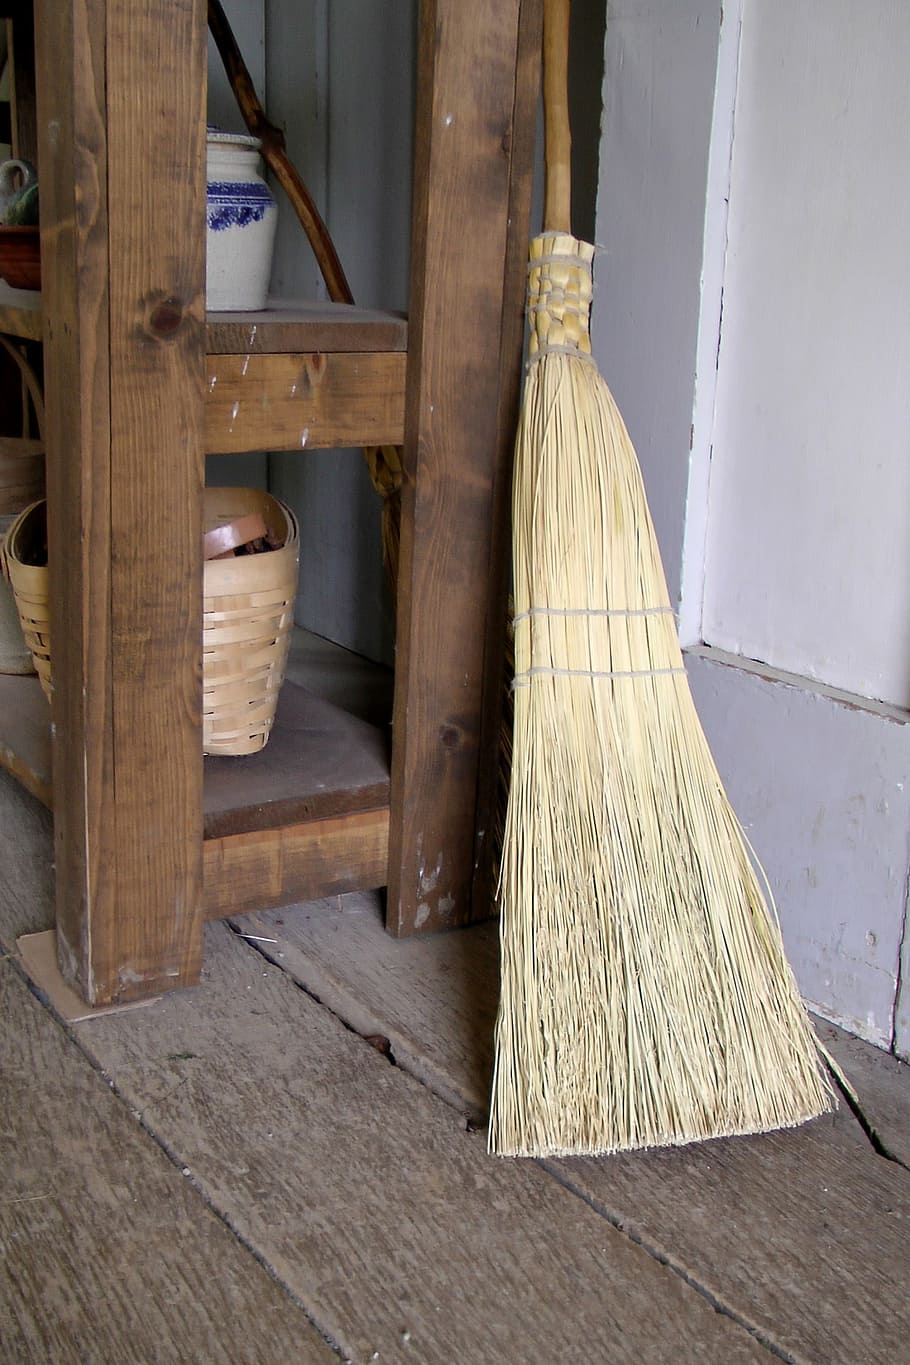 brown, beige, broom, leaning, table, brooms, brushes, tools, sweeping, cleaning